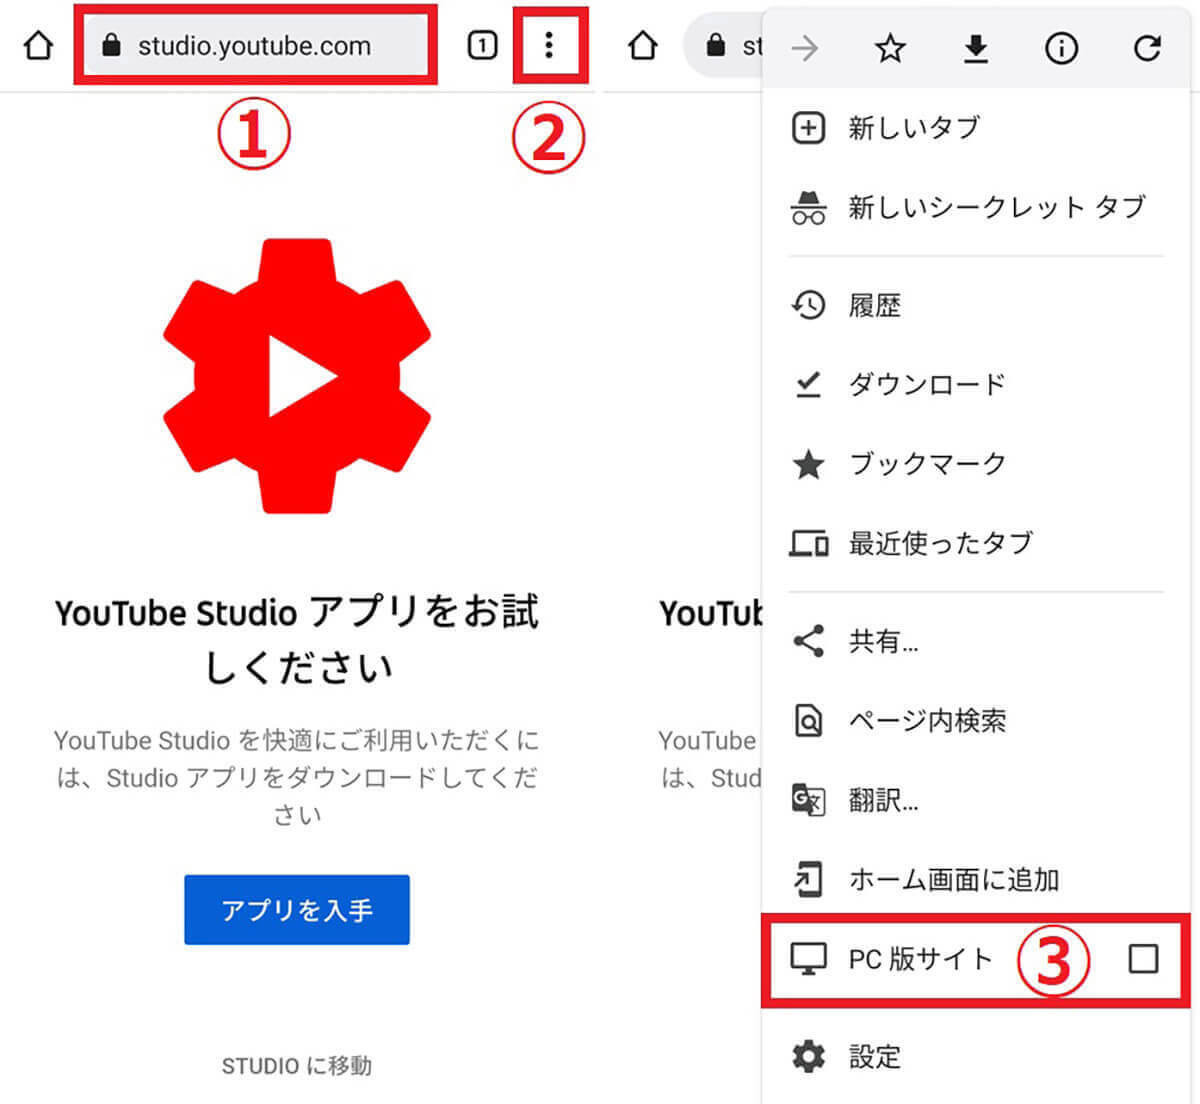 【Android向け】YouTubeをGoogle Chromeで開く方法 | YouTube Studioの管理に便利3